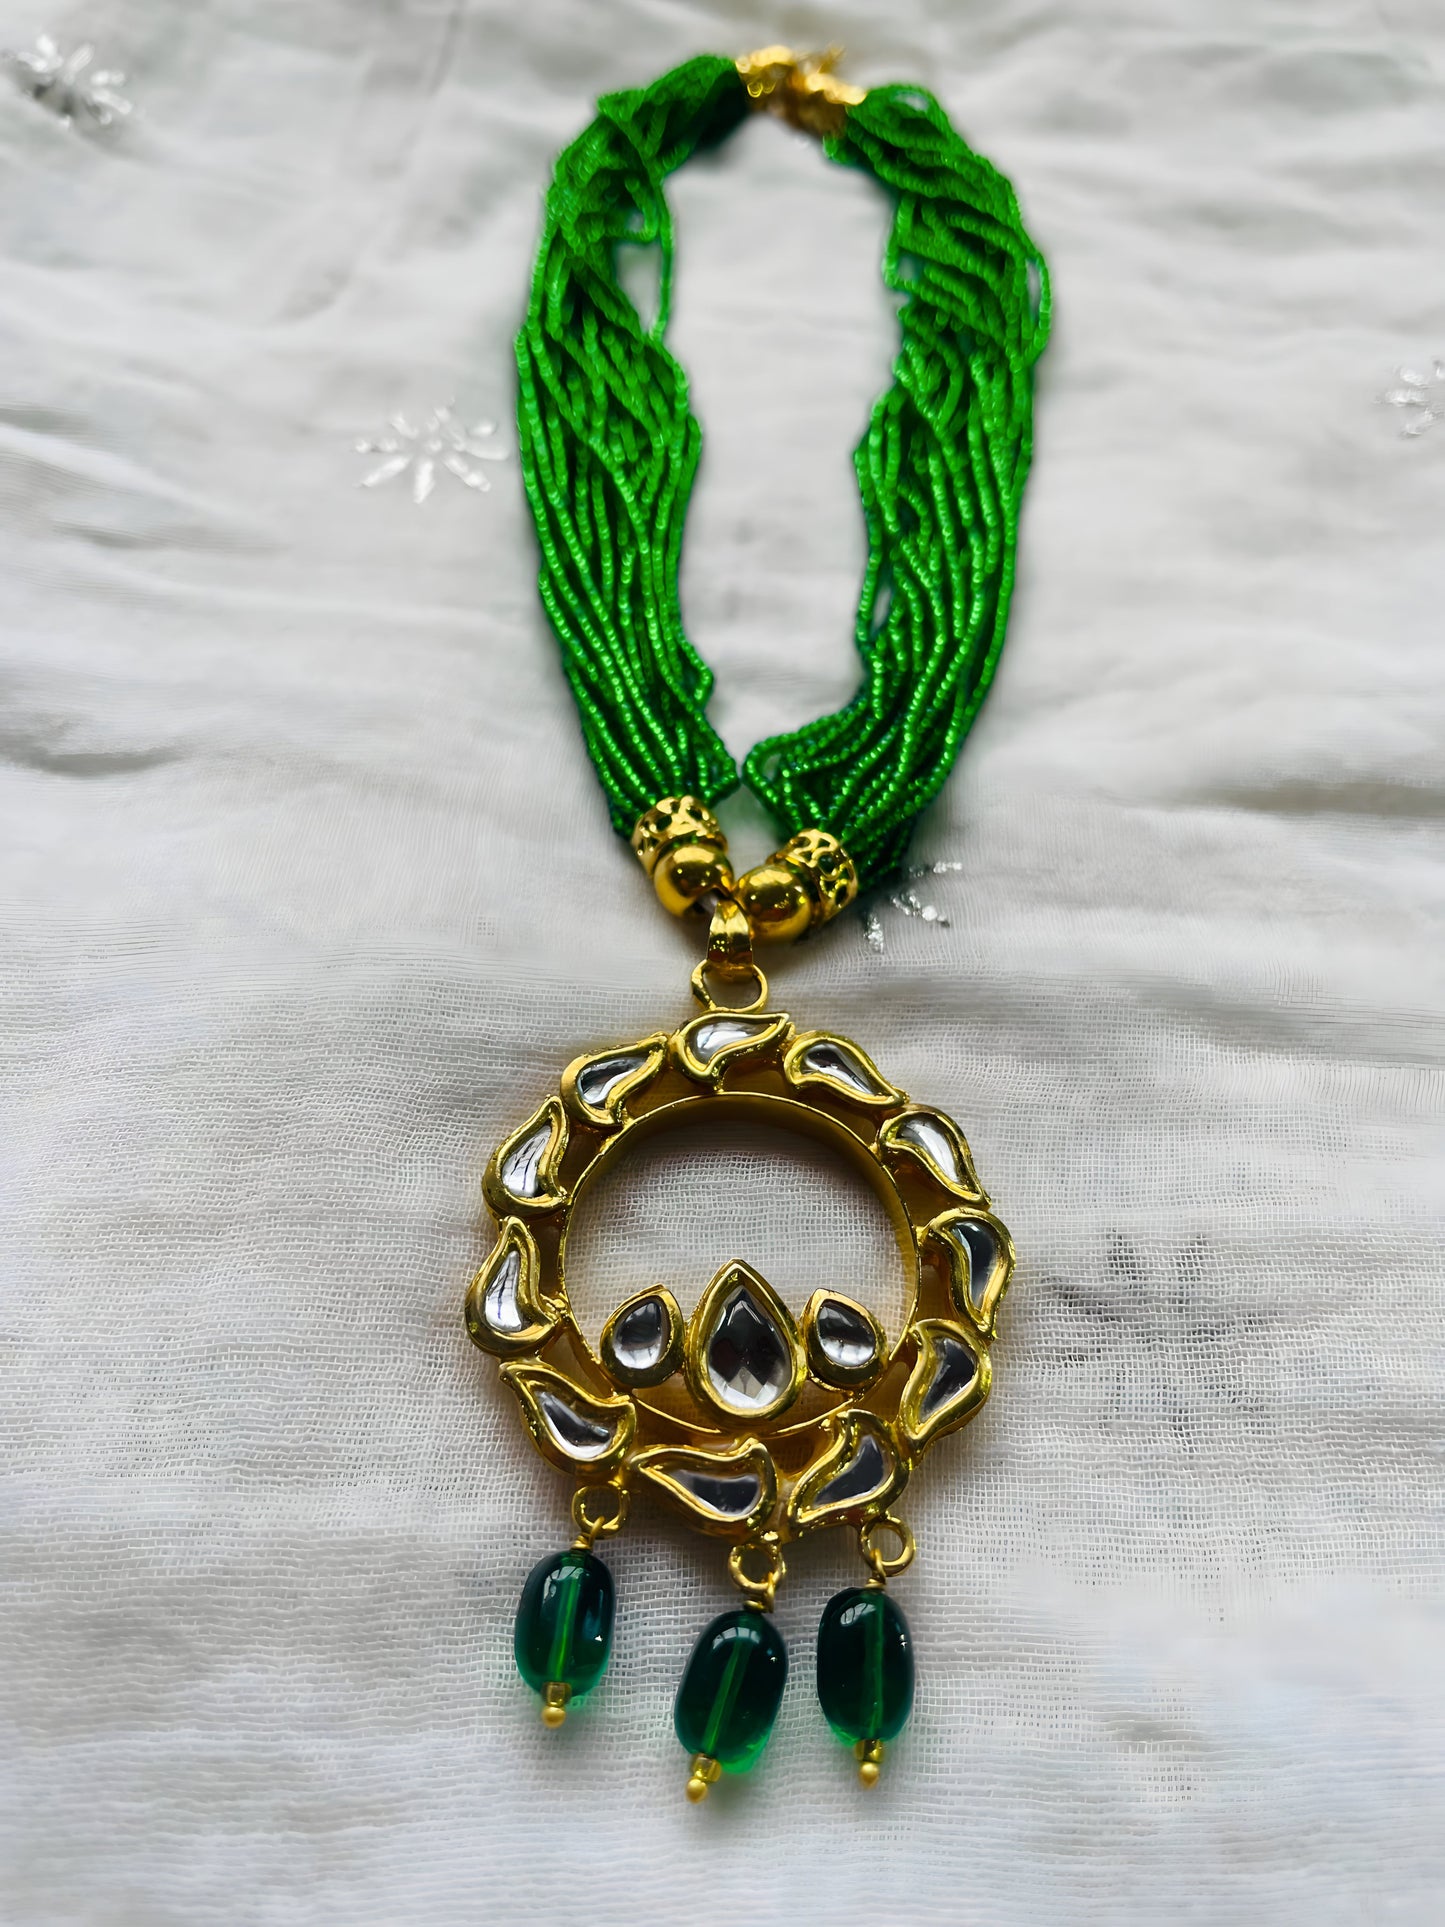 Designer Kundan Necklace